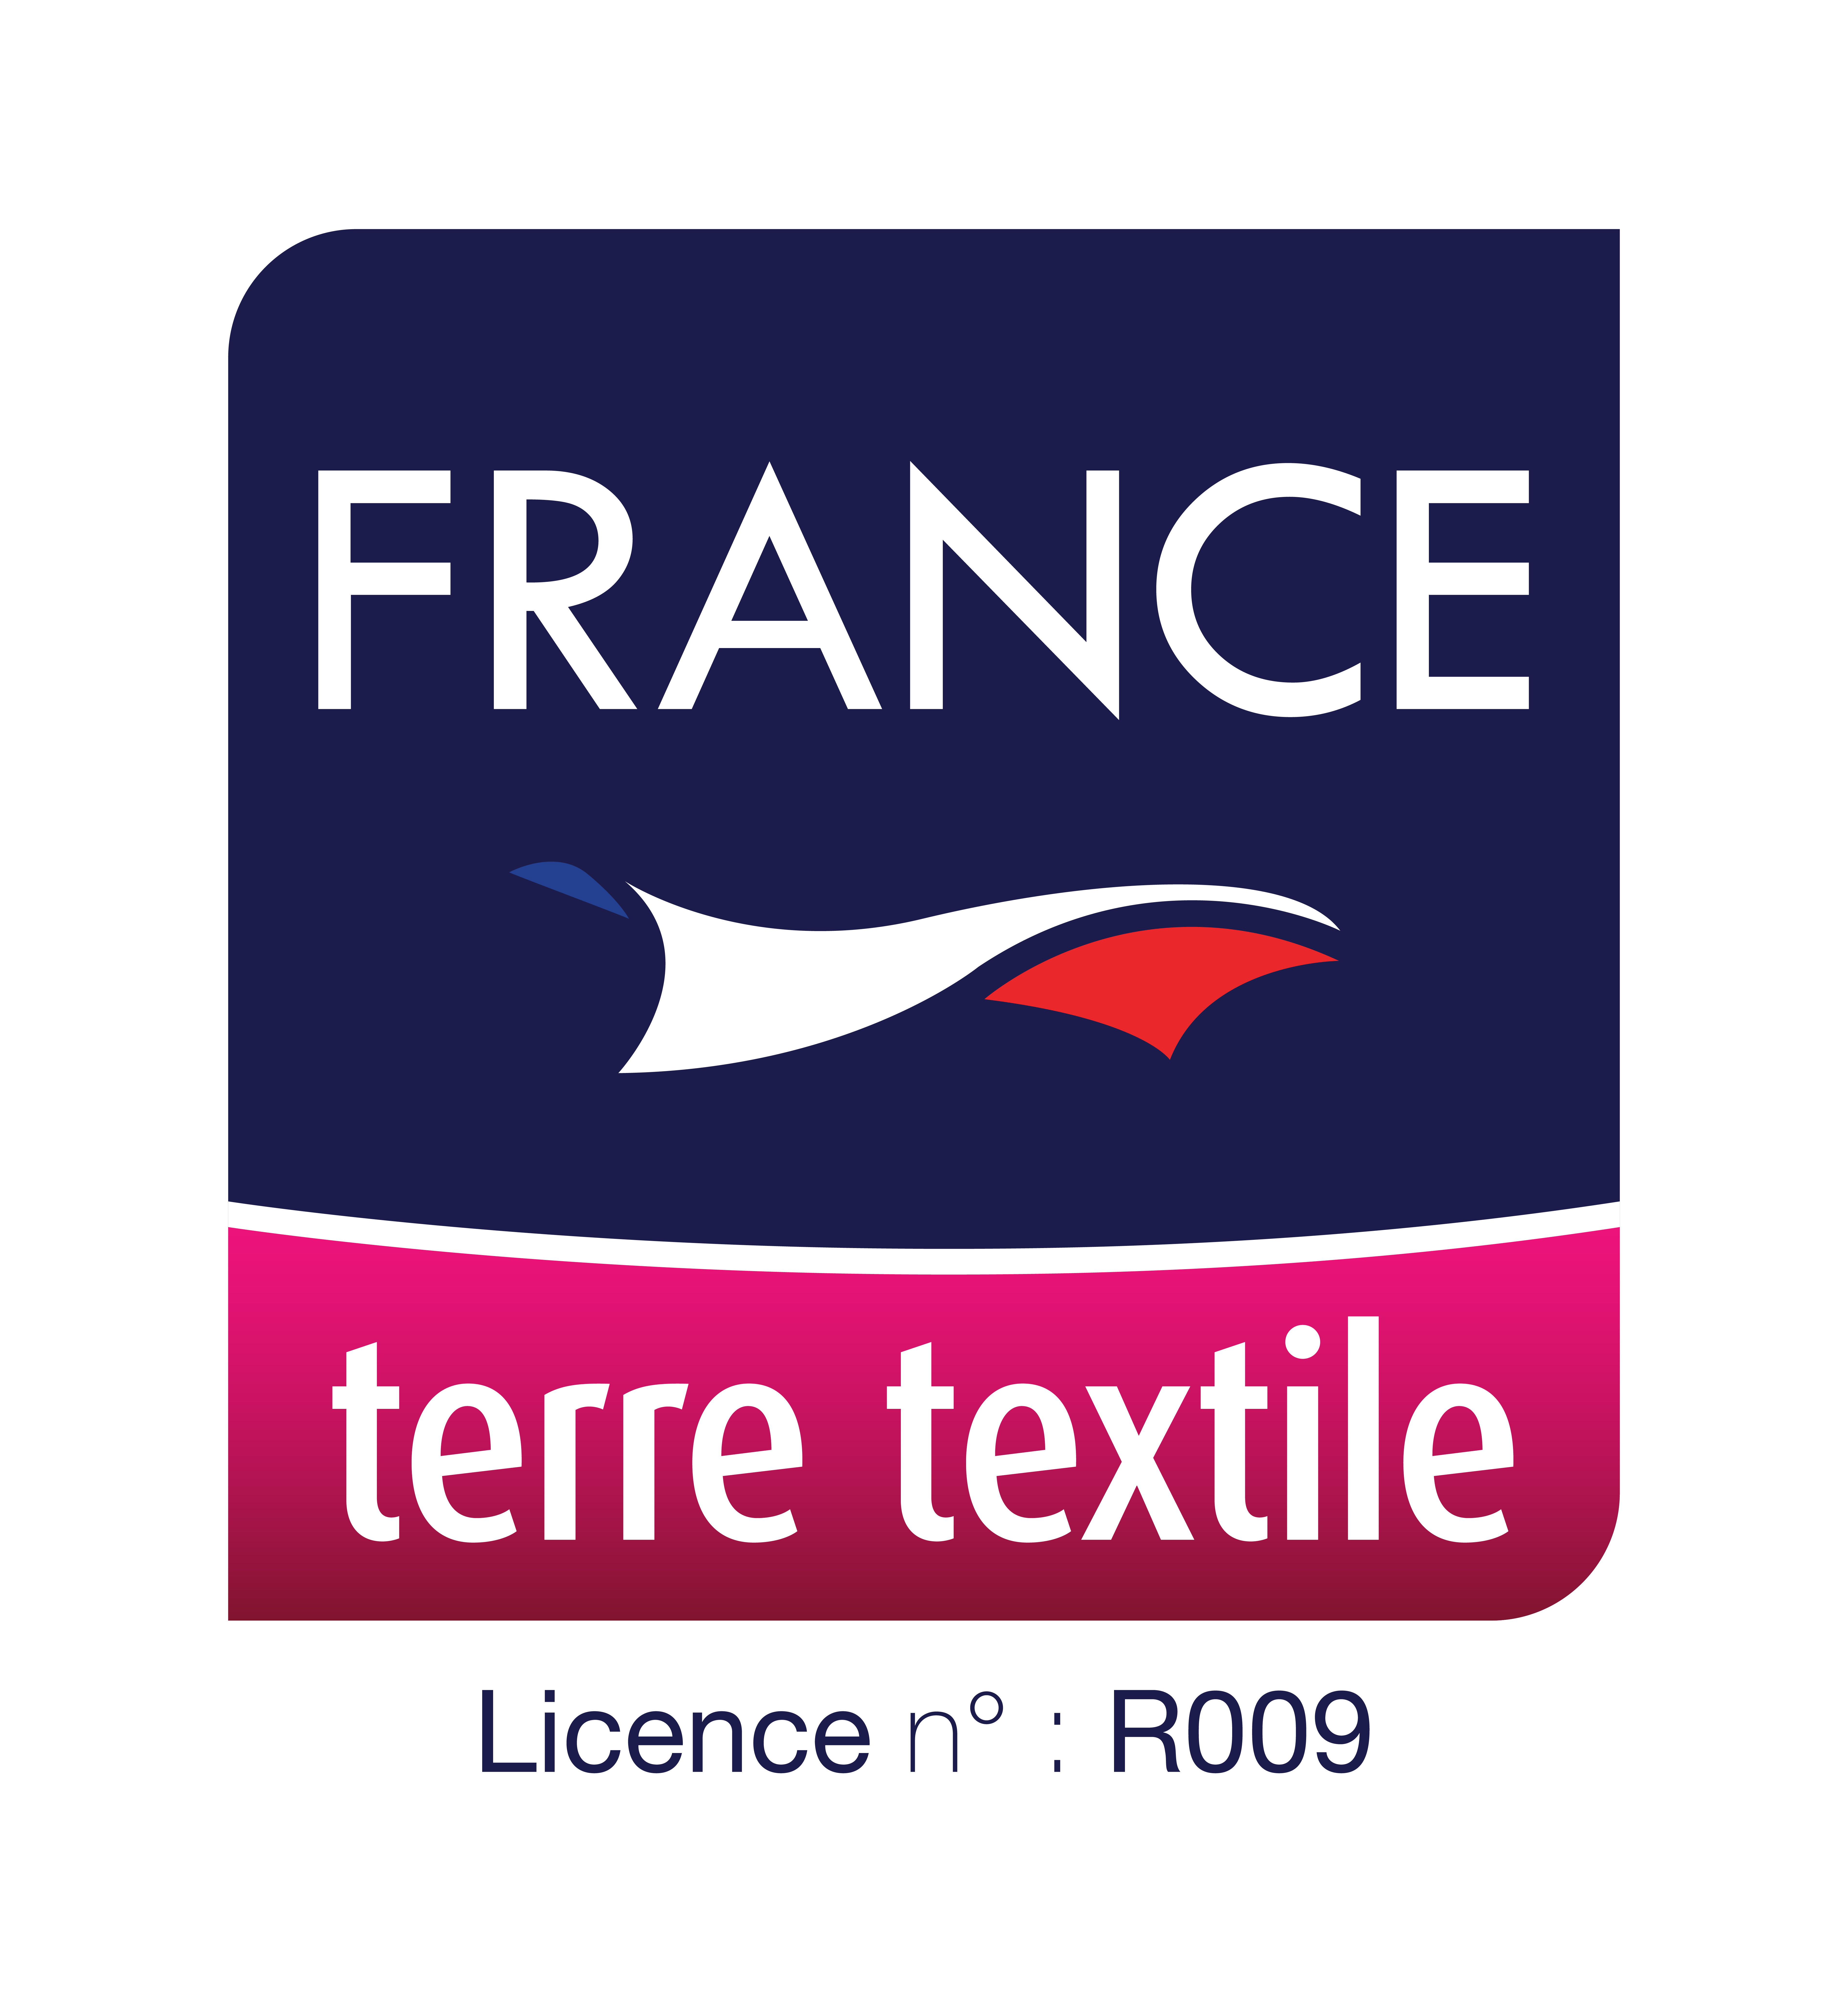 France Terre Textile